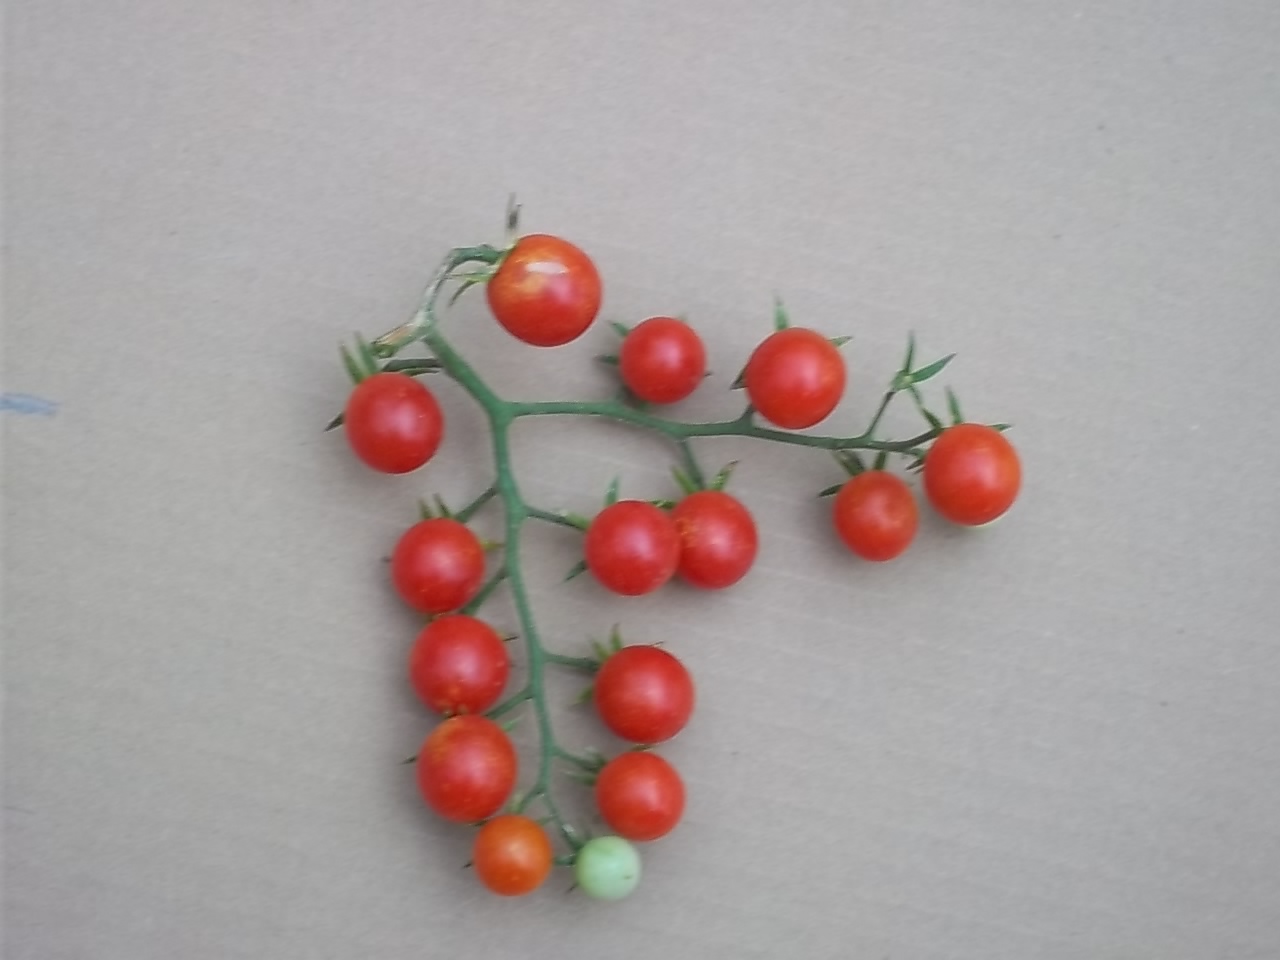 Loren Meinz - Cherry tomatoes